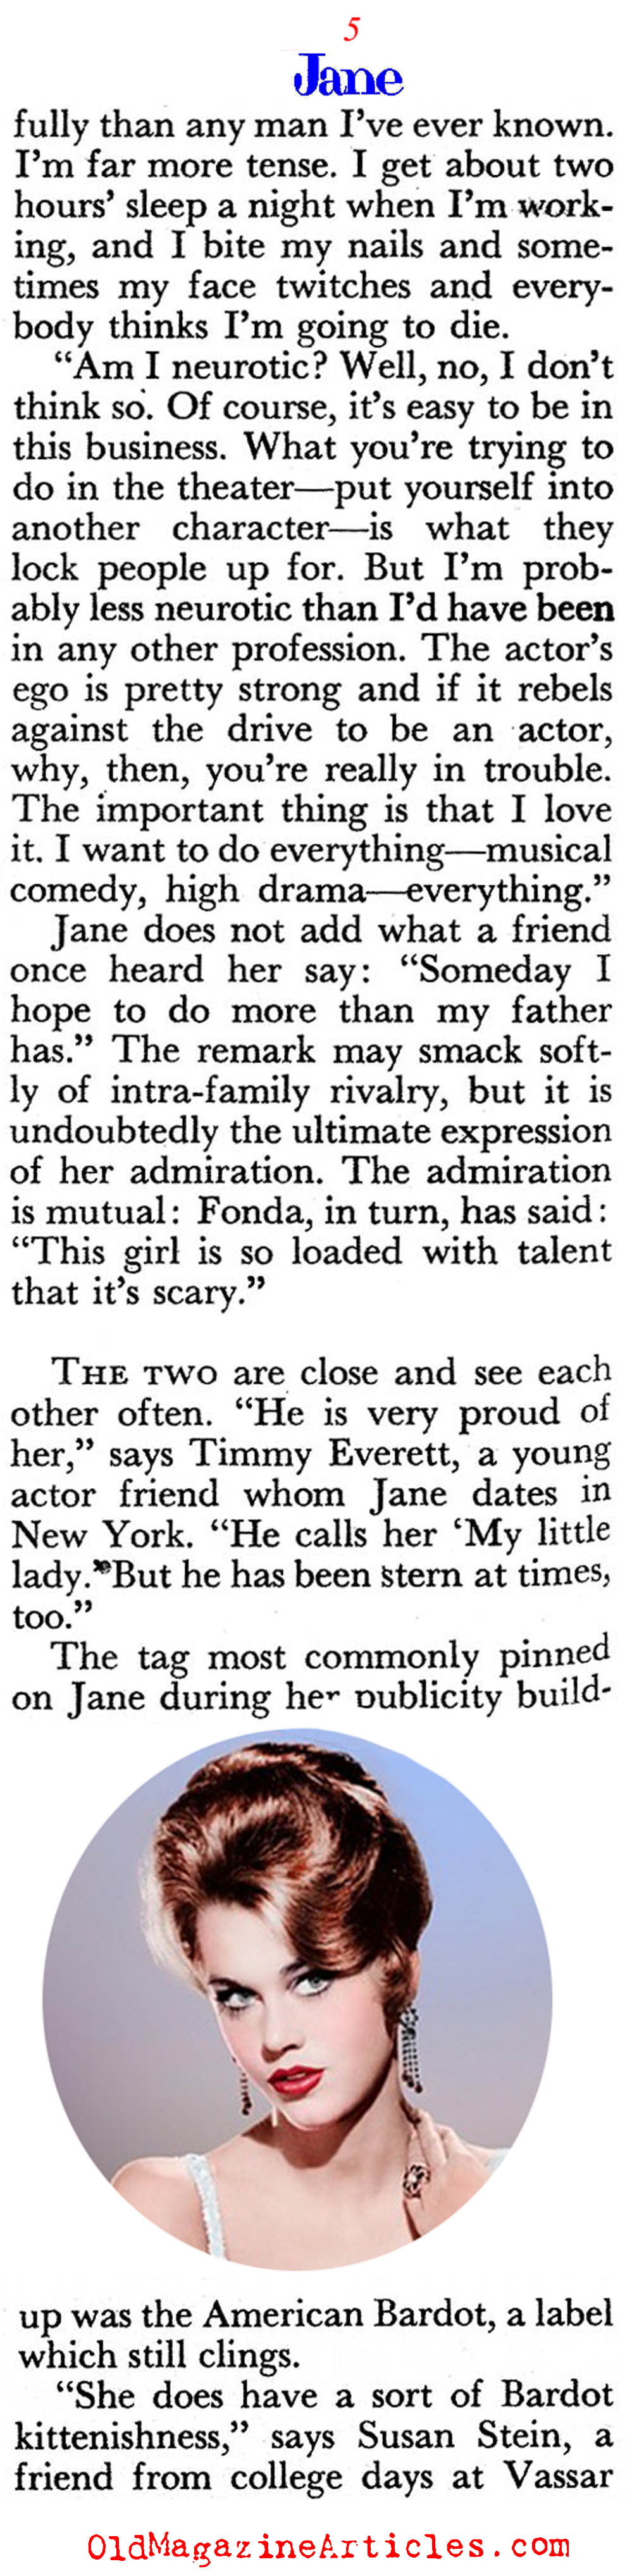 Jane Fonda (Pageant Magazine, 1960)